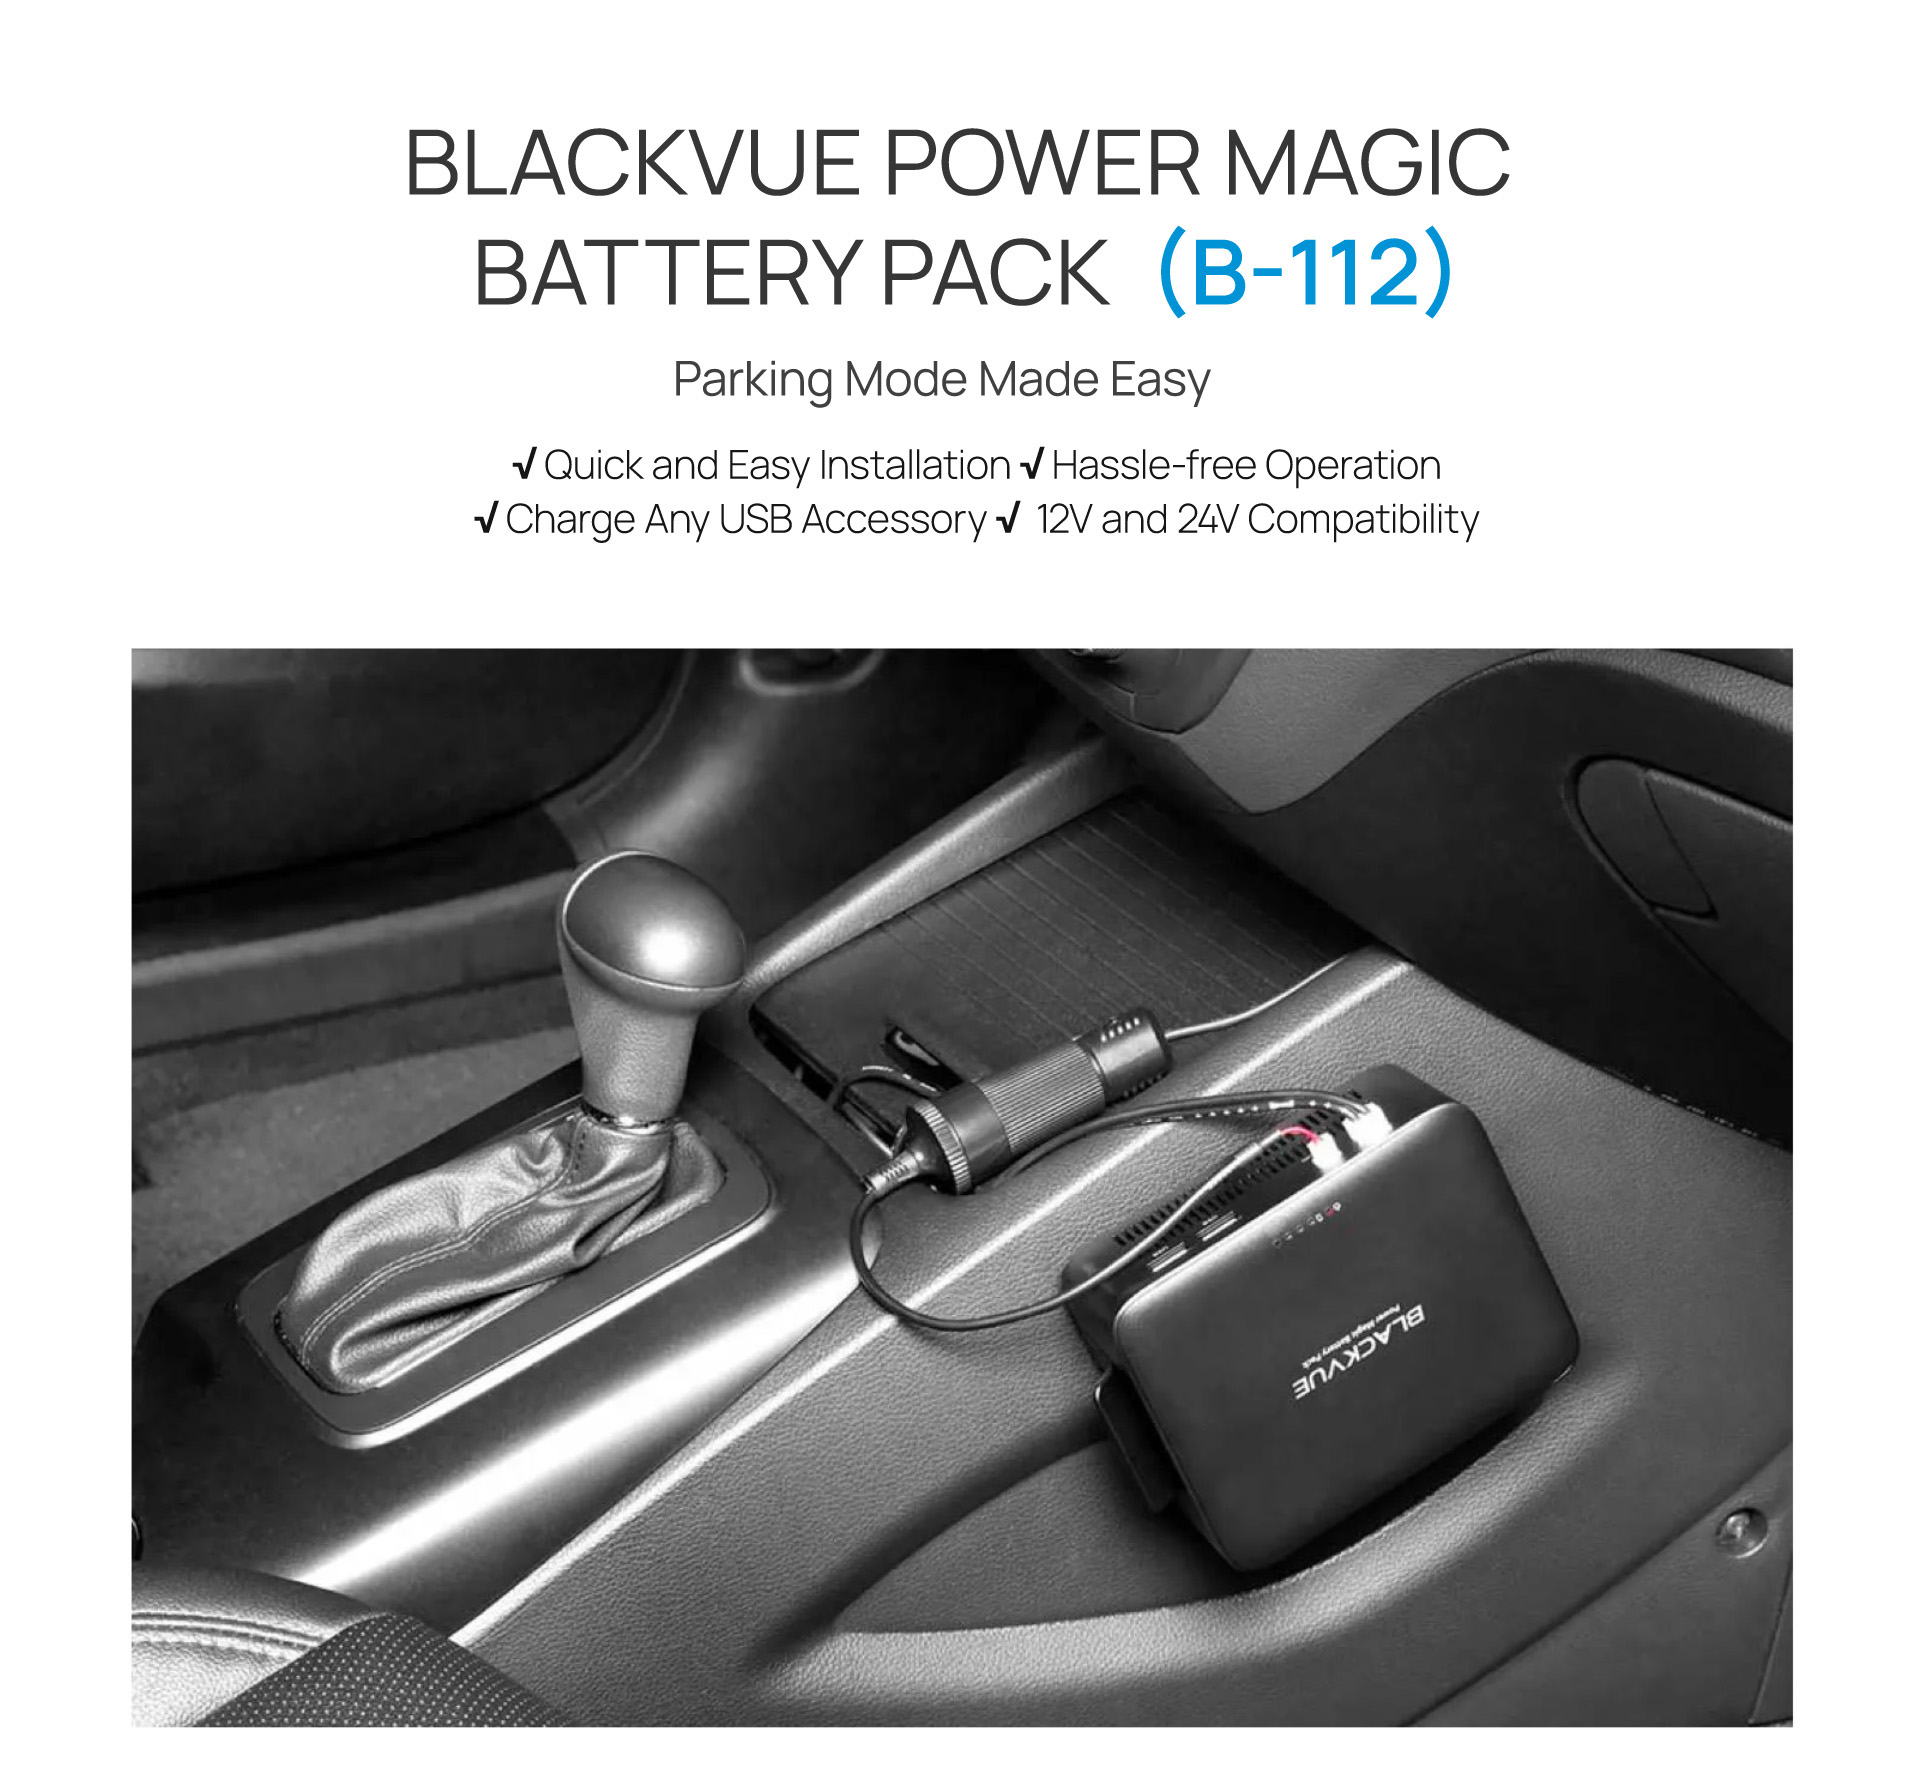 Power Magic blackvue(B-112)-1